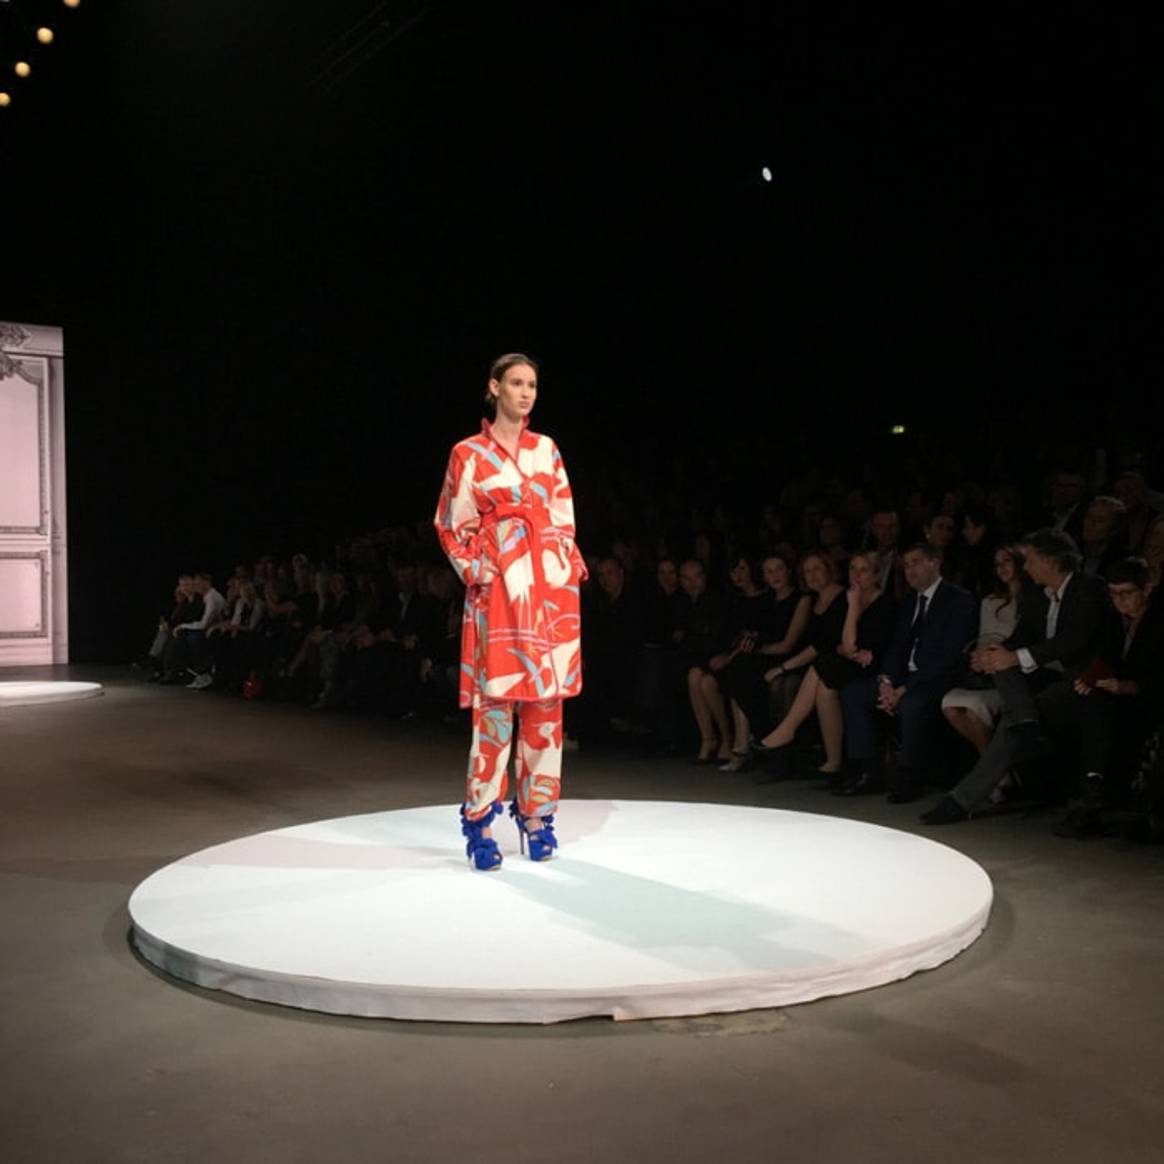 Openingsavond Amsterdam Fashion Week: “Er is een duidelijk signatuur nodig”